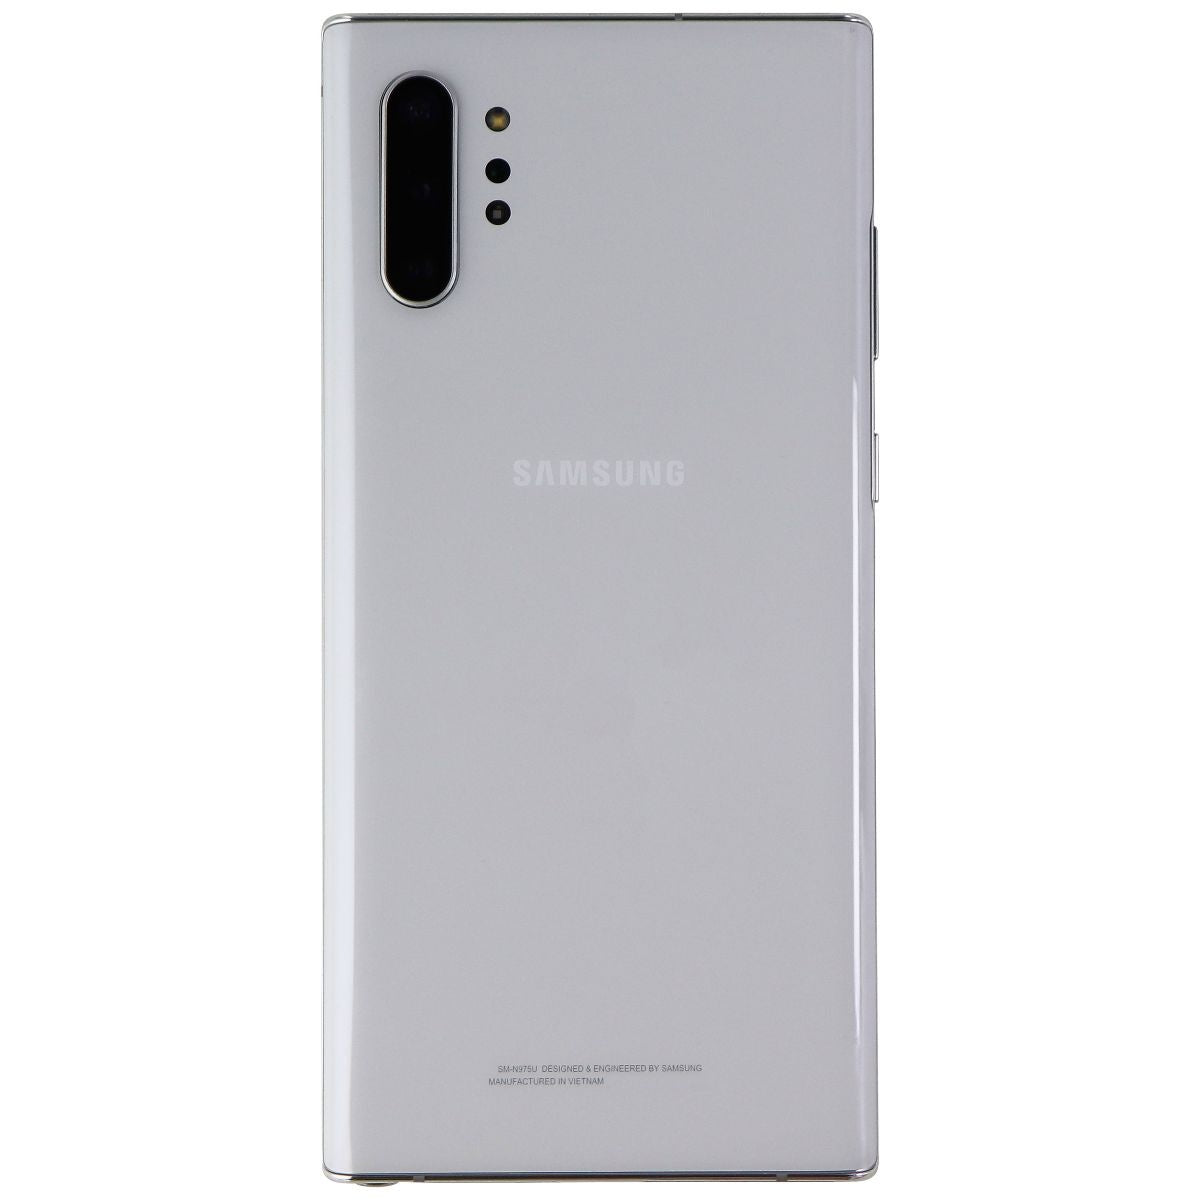 Samsung Galaxy Note10+ Smartphone (SM-N975U) Unlocked - 256GB / Aura White Cell Phones & Smartphones Samsung    - Simple Cell Bulk Wholesale Pricing - USA Seller